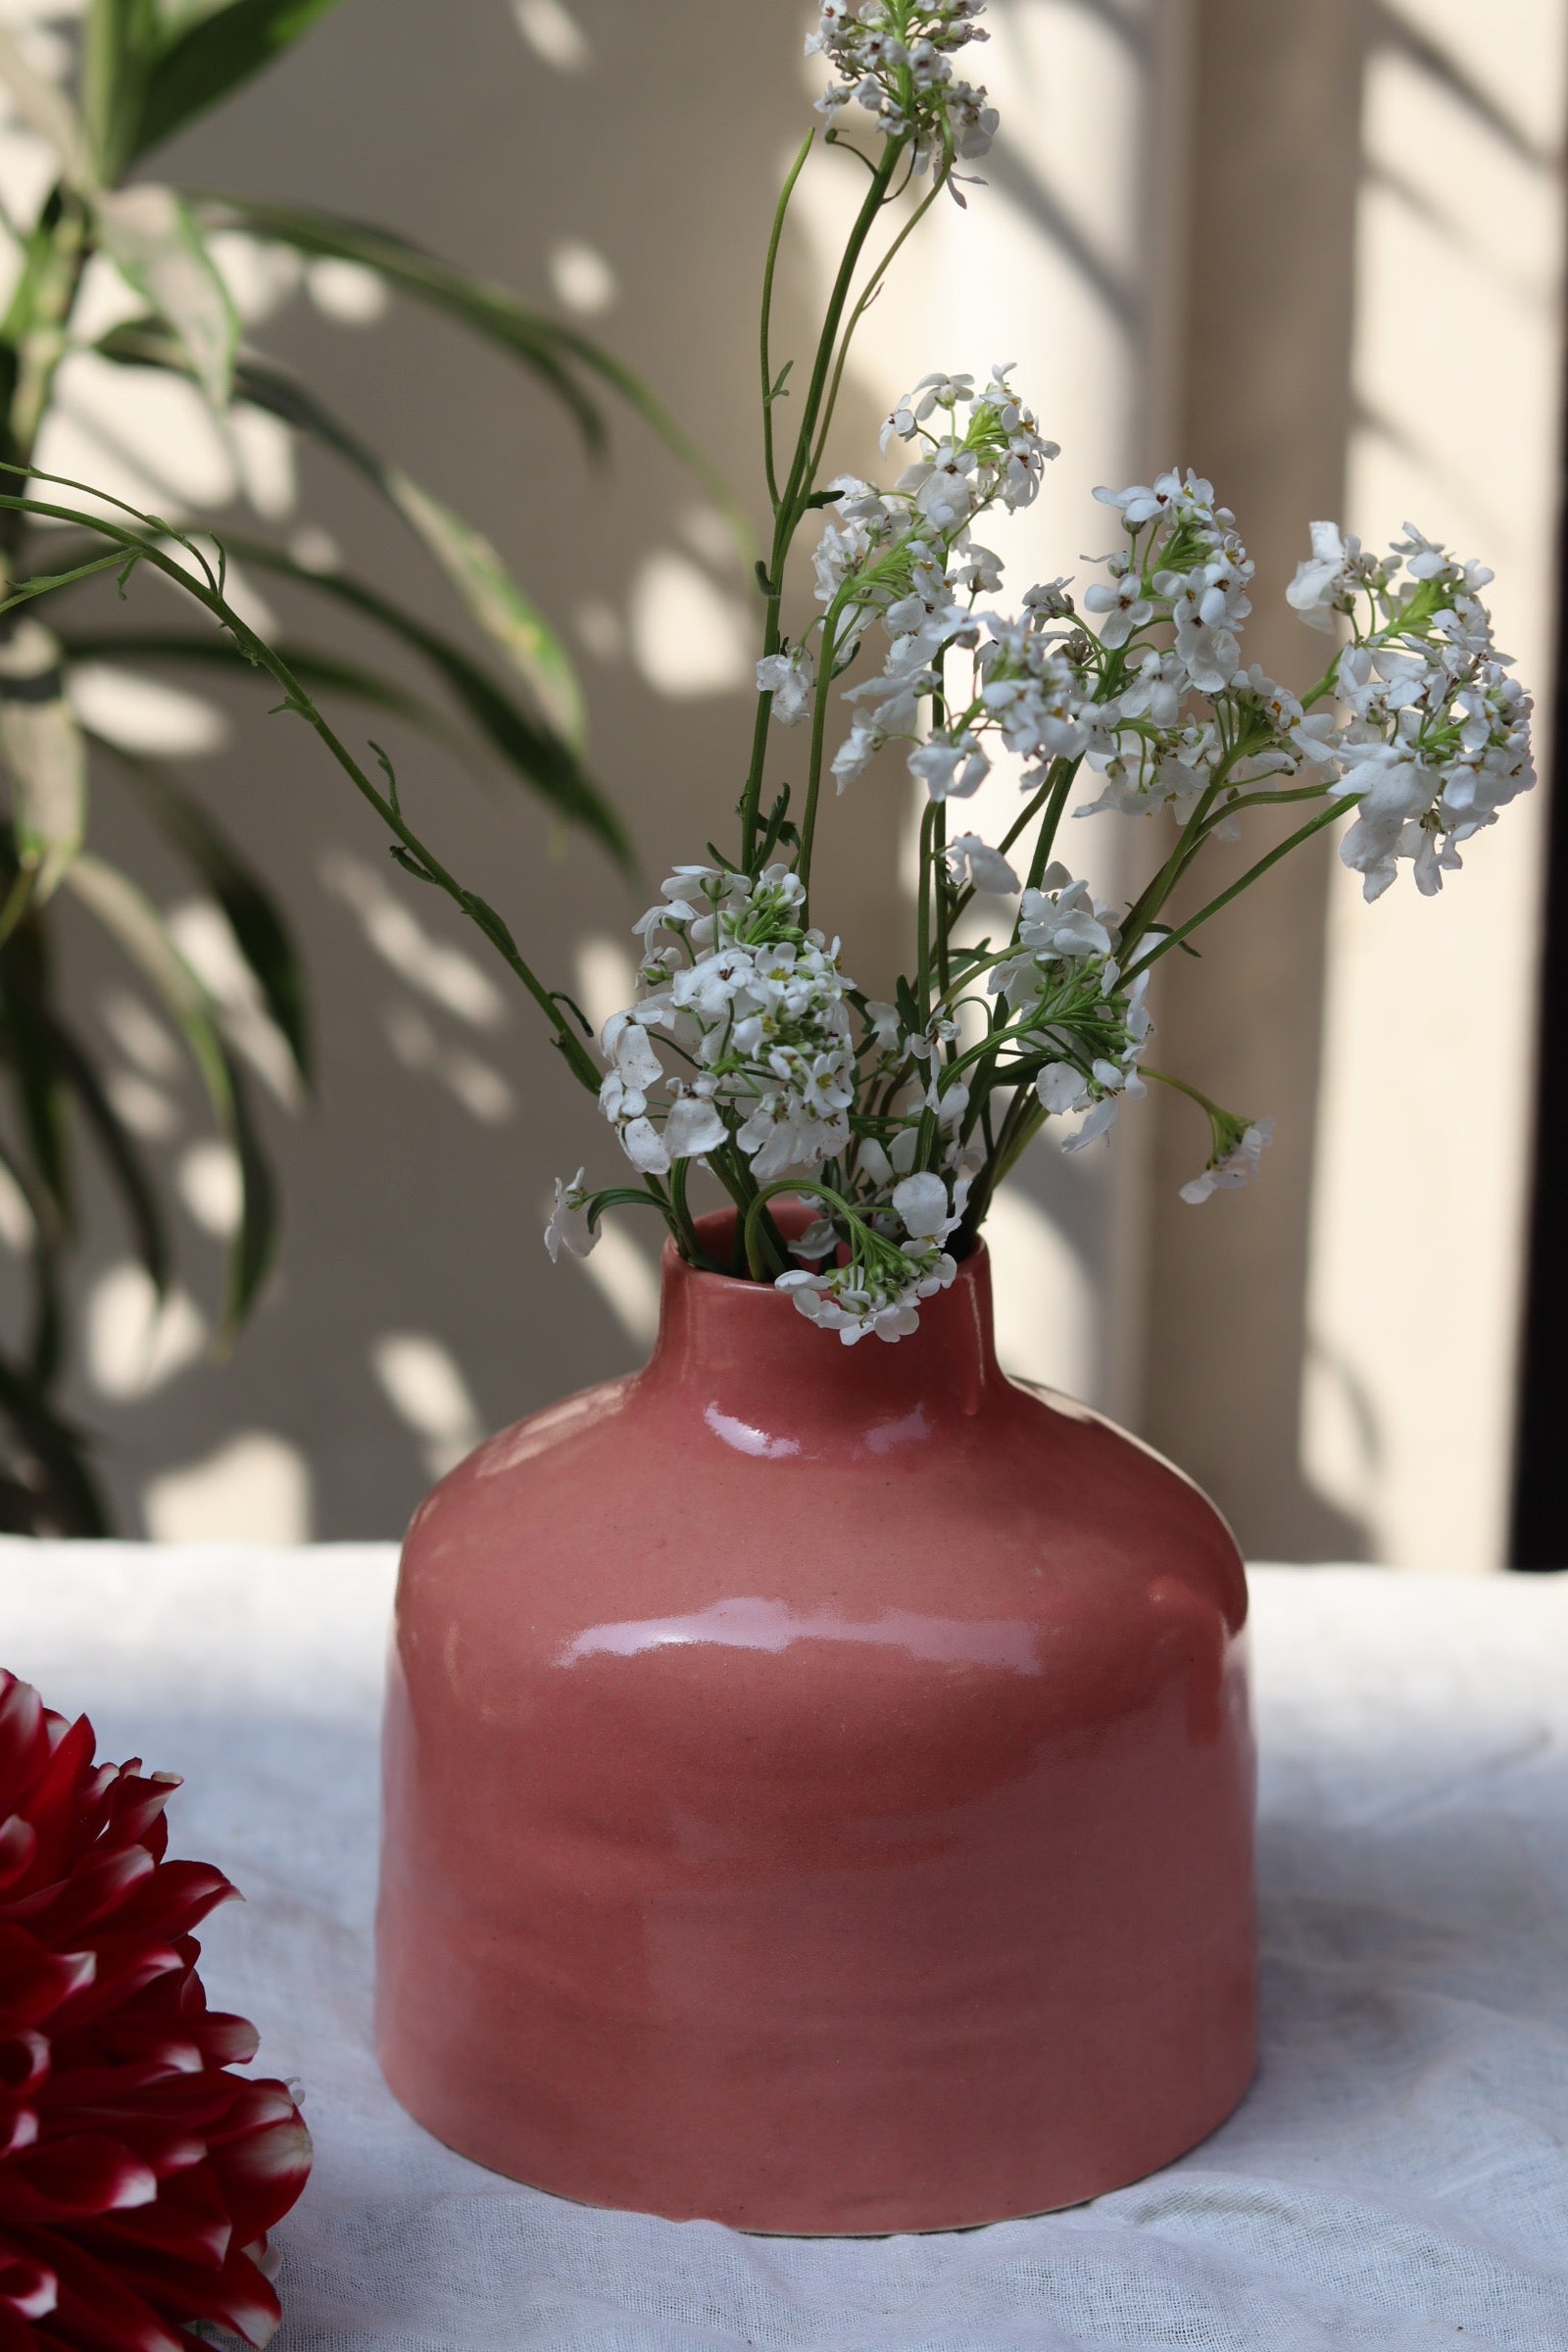 Ceramic pink flower vase with white flowers